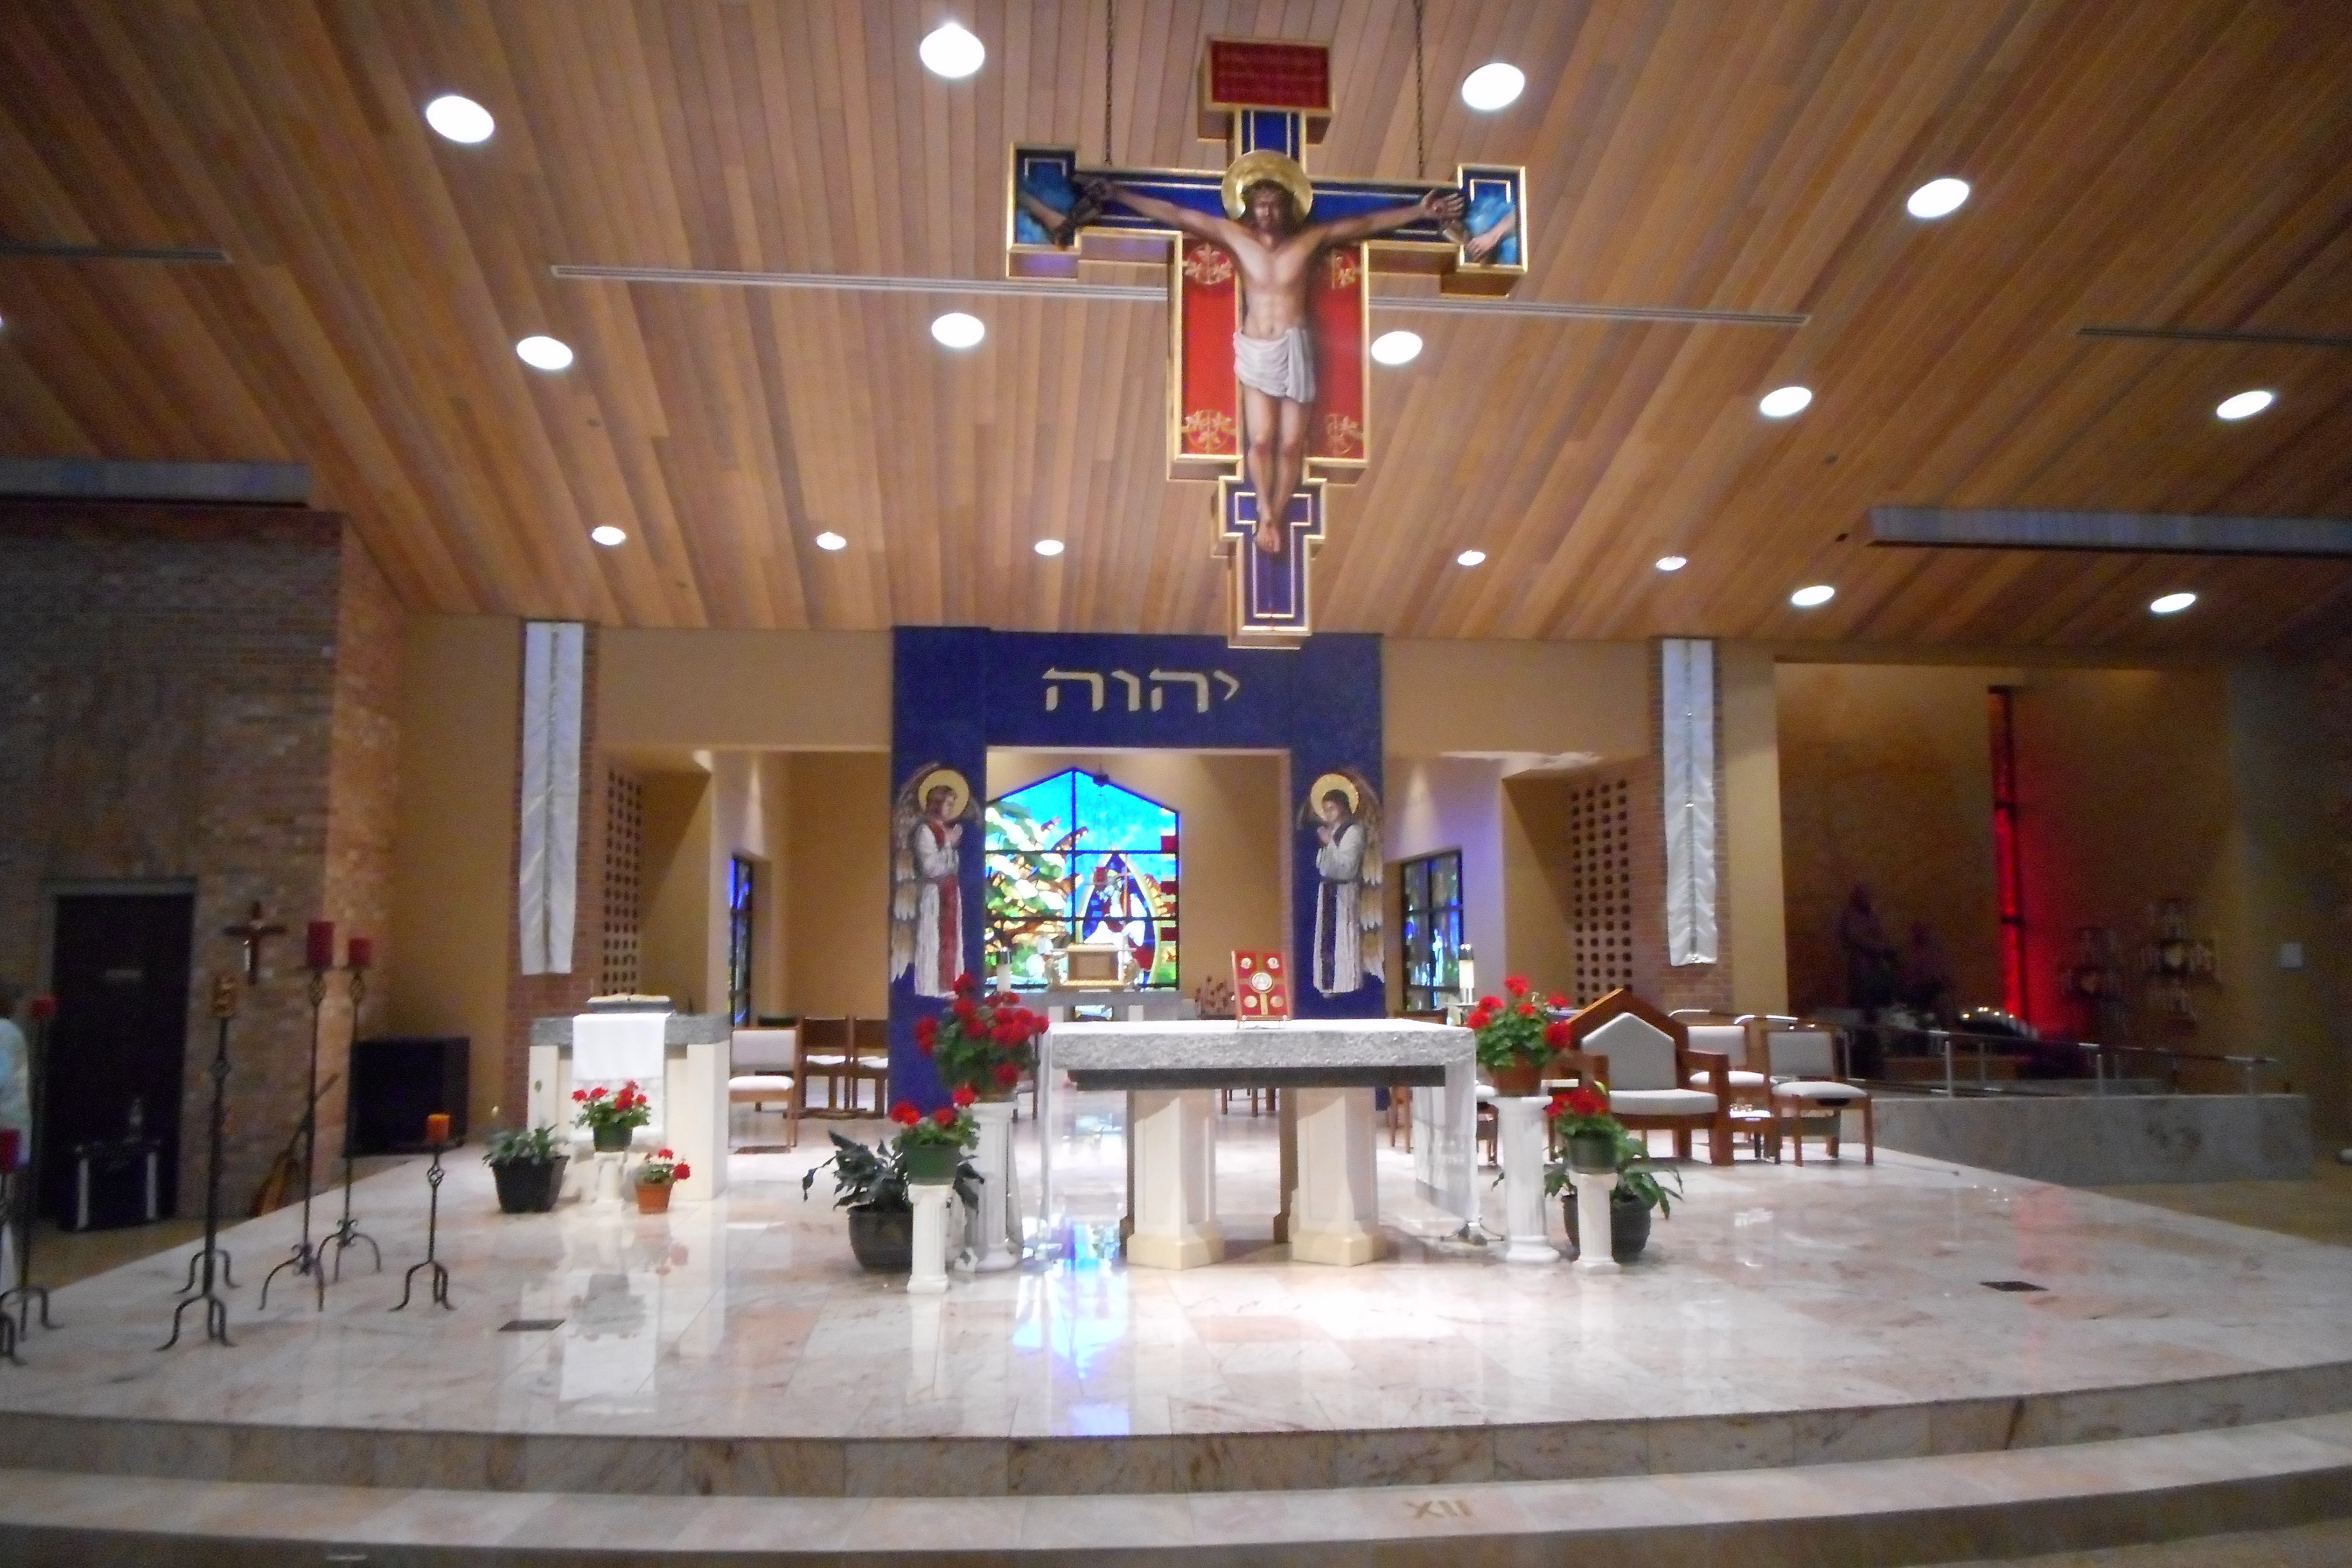 St Catherine of Siena, Portage, MI (Interior)